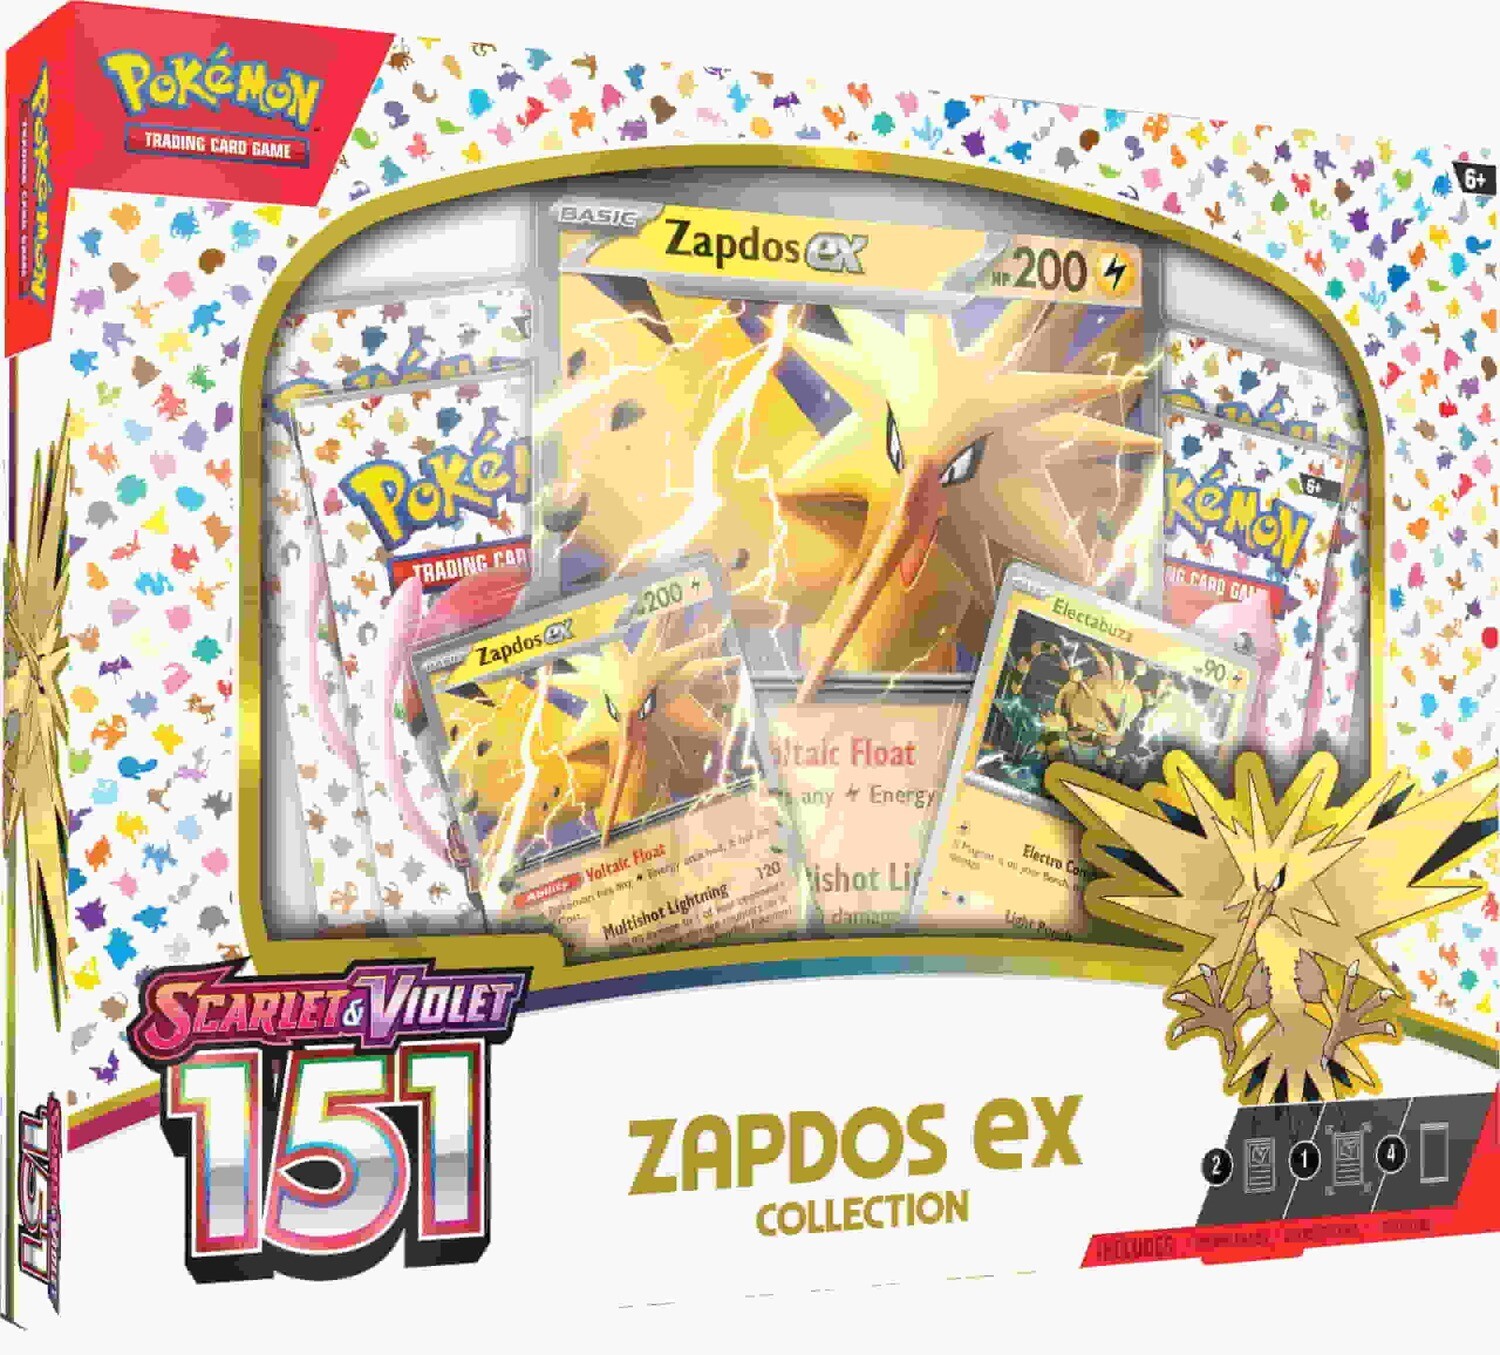 Pokémon - Karmesin und Purpur - 151 - Zapdos ex Kollektion - EN